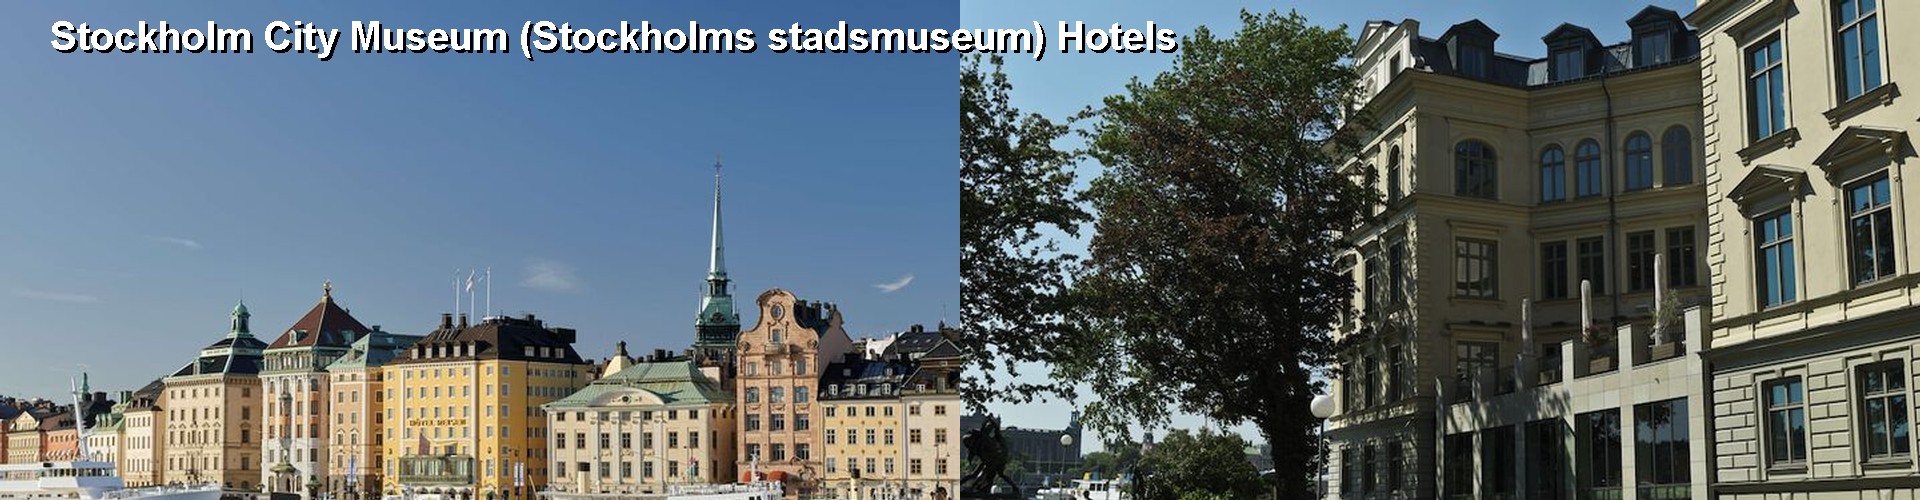 5 Best Hotels near Stockholm City Museum (Stockholms stadsmuseum)